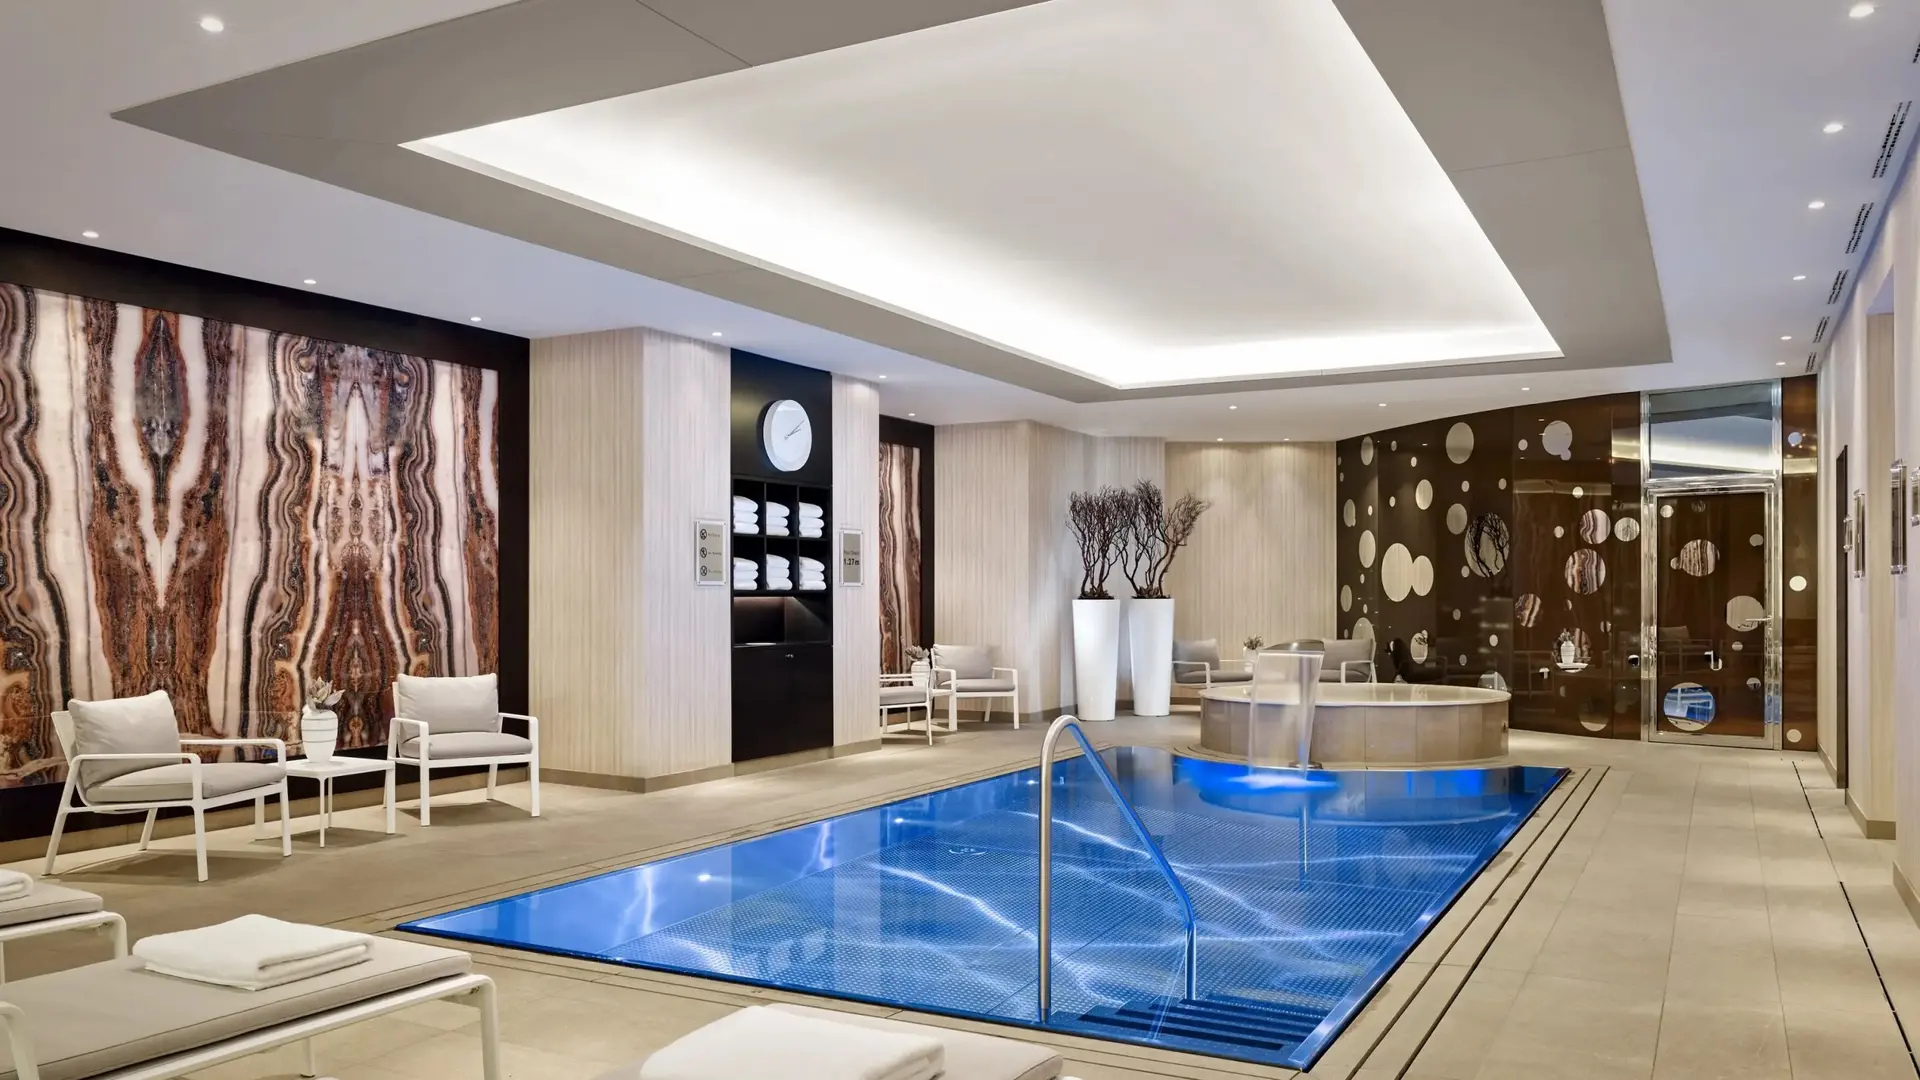 Hotel review Service & Facilities' - The Ritz-Carlton, Berlin - 0